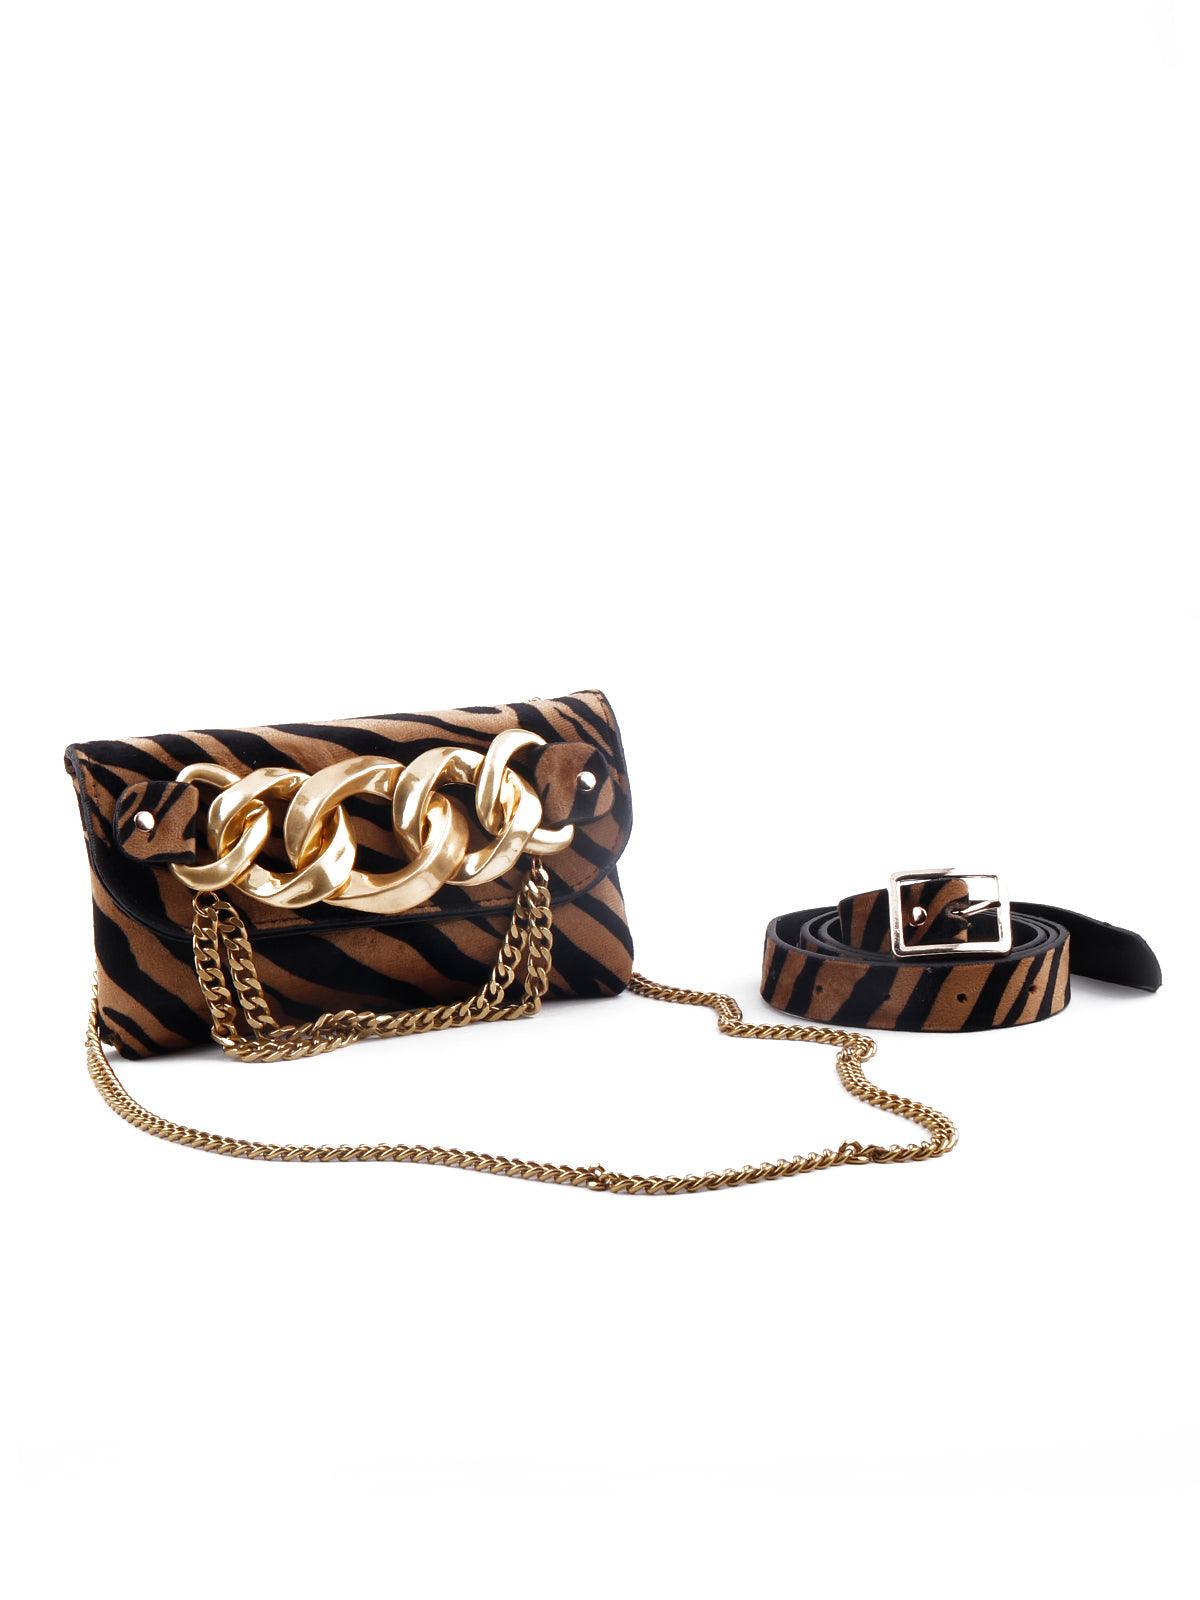 Gorgeous brown animal print sling bag for women - Odette